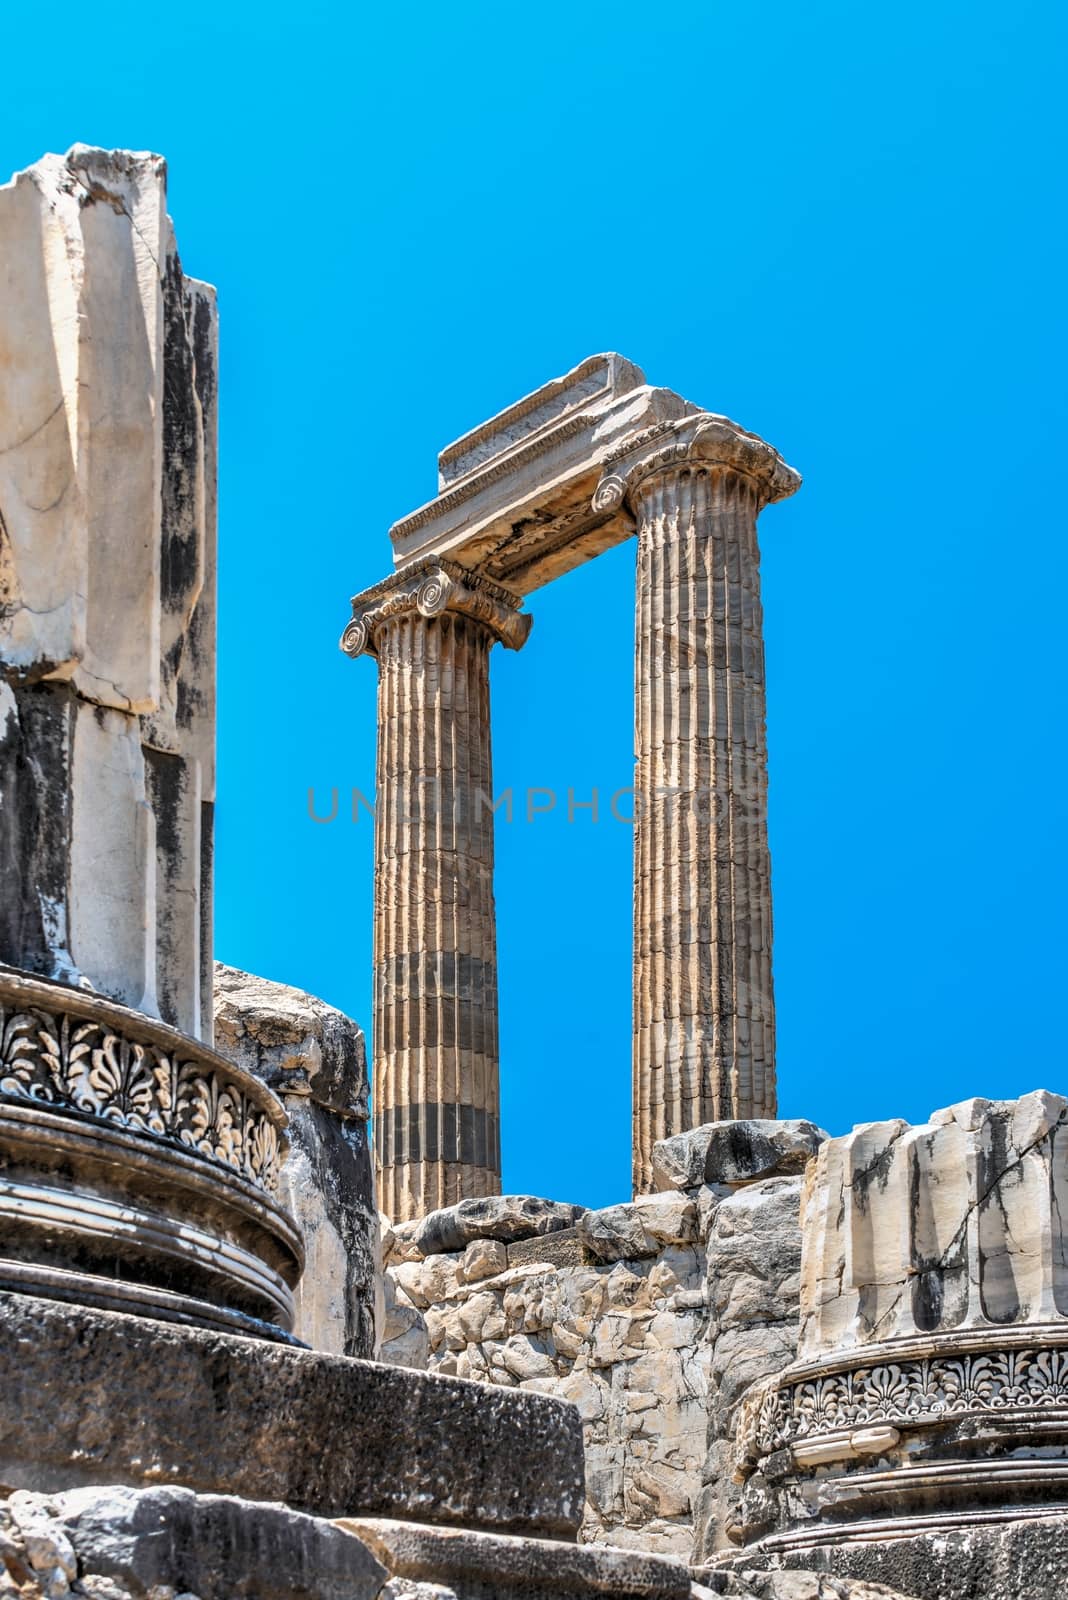 Ionic Columns in the Temple of Apollo at Didyma, Turkey by Multipedia